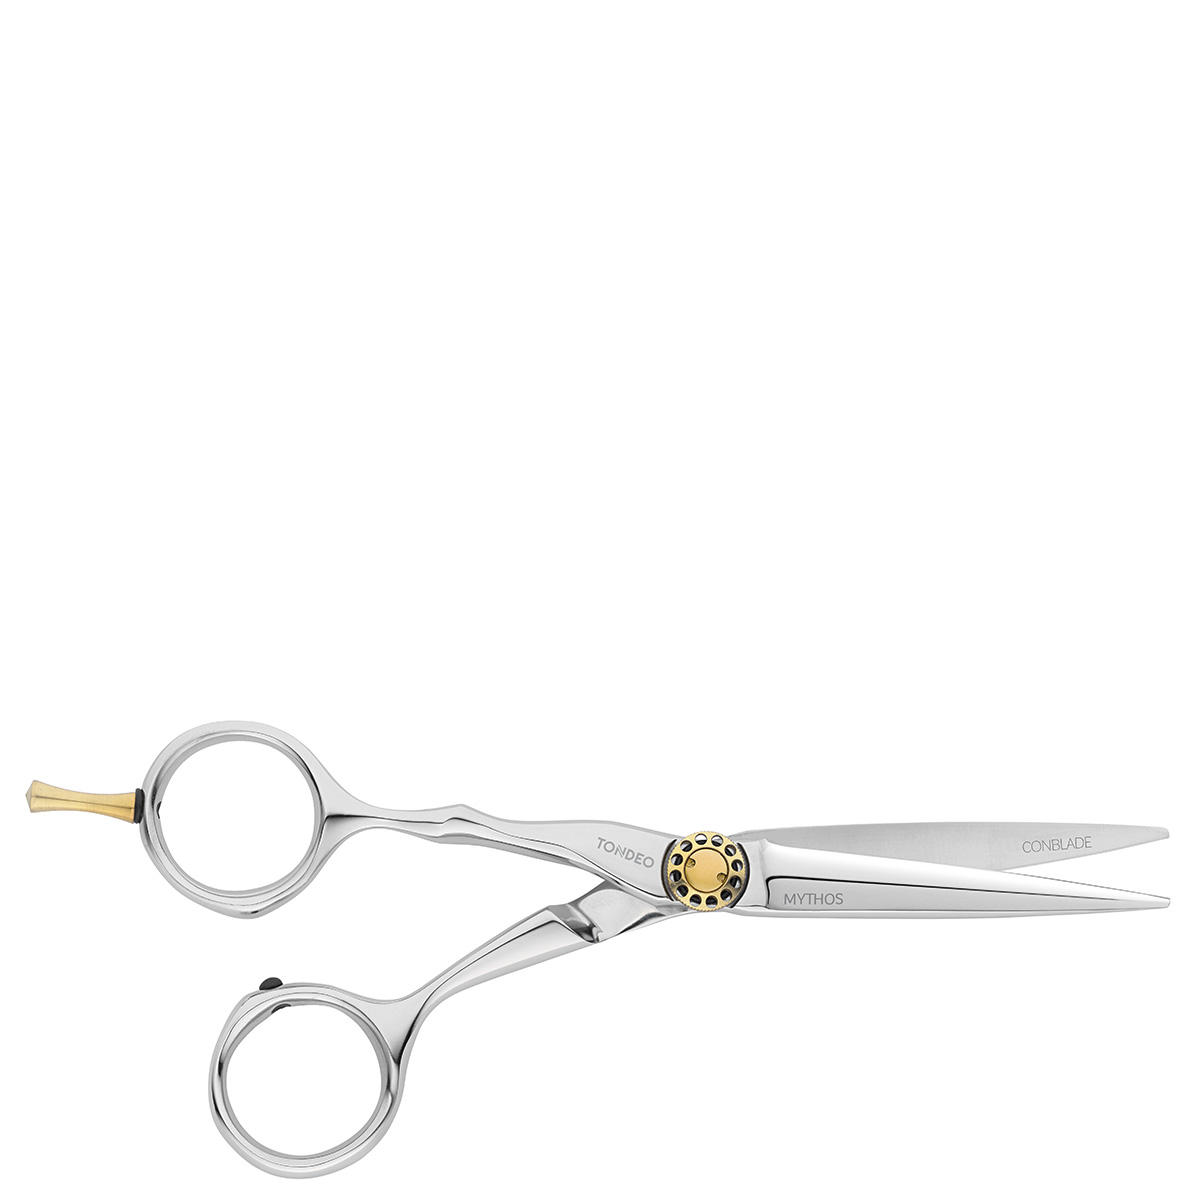 Tondeo Hair Scissors Myth Offset Conblade Left 5,5" - 1